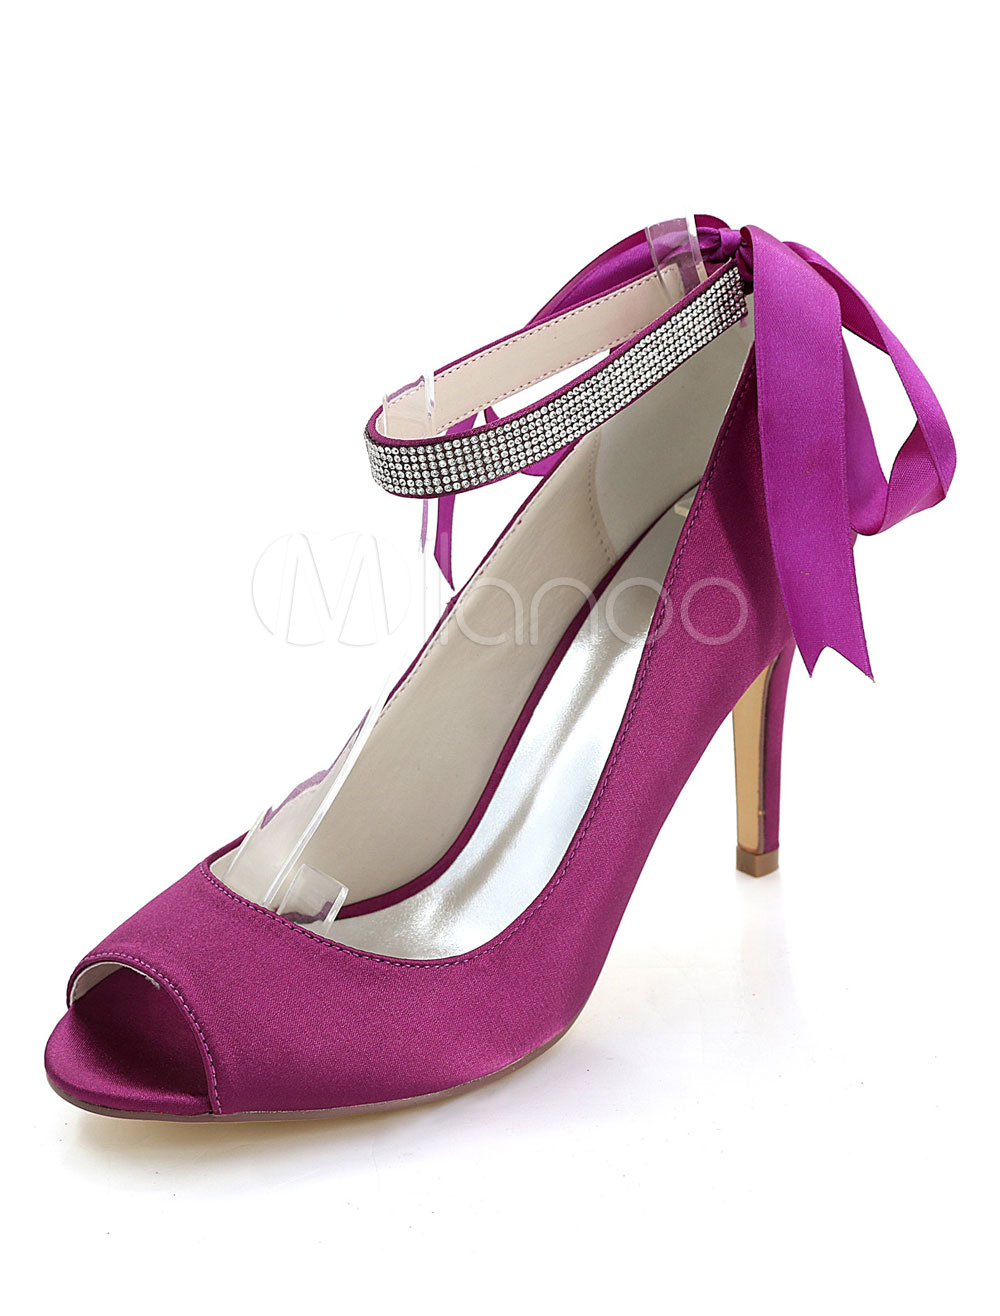 purple wedding shoes with rhinestones